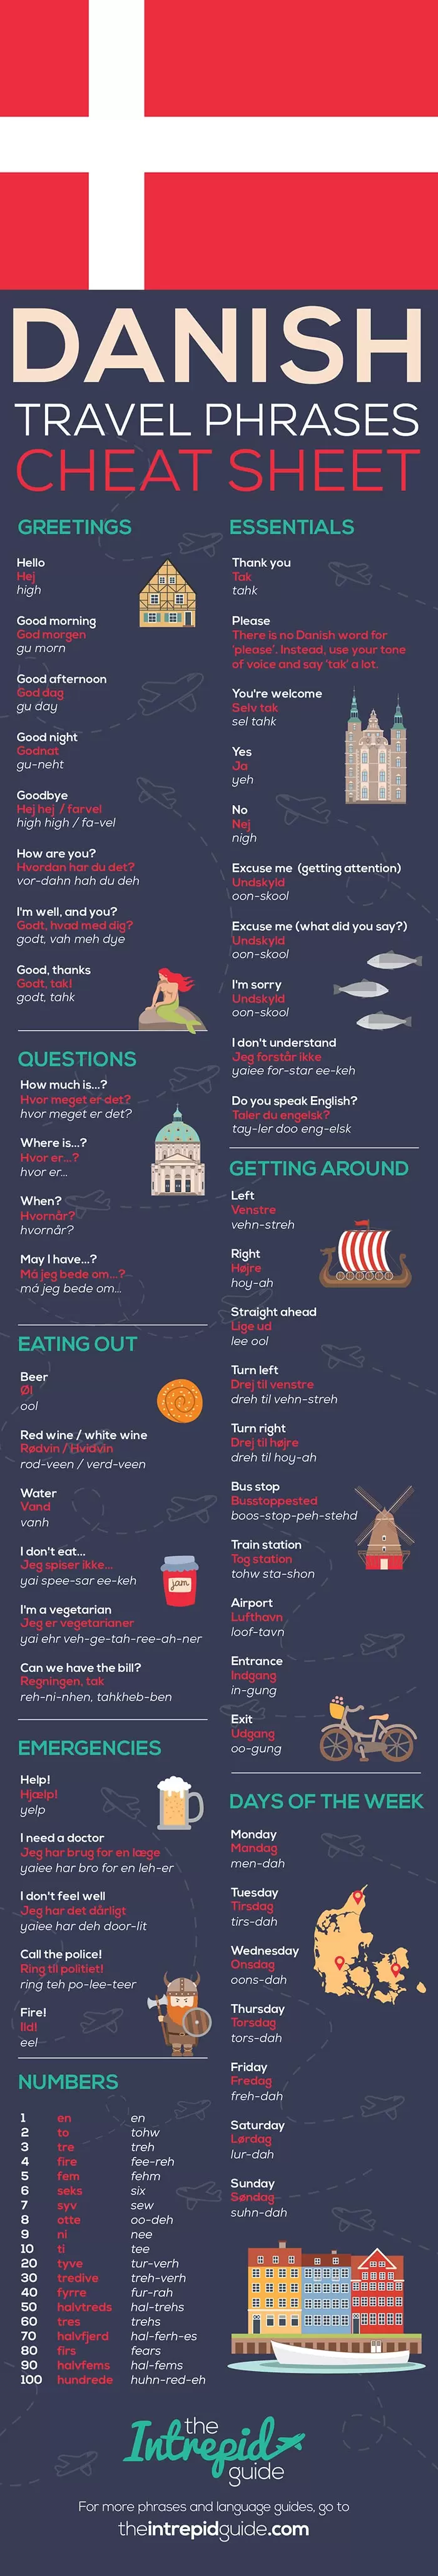 Basic Danish Phrases - Danish Travel Phrase Guide